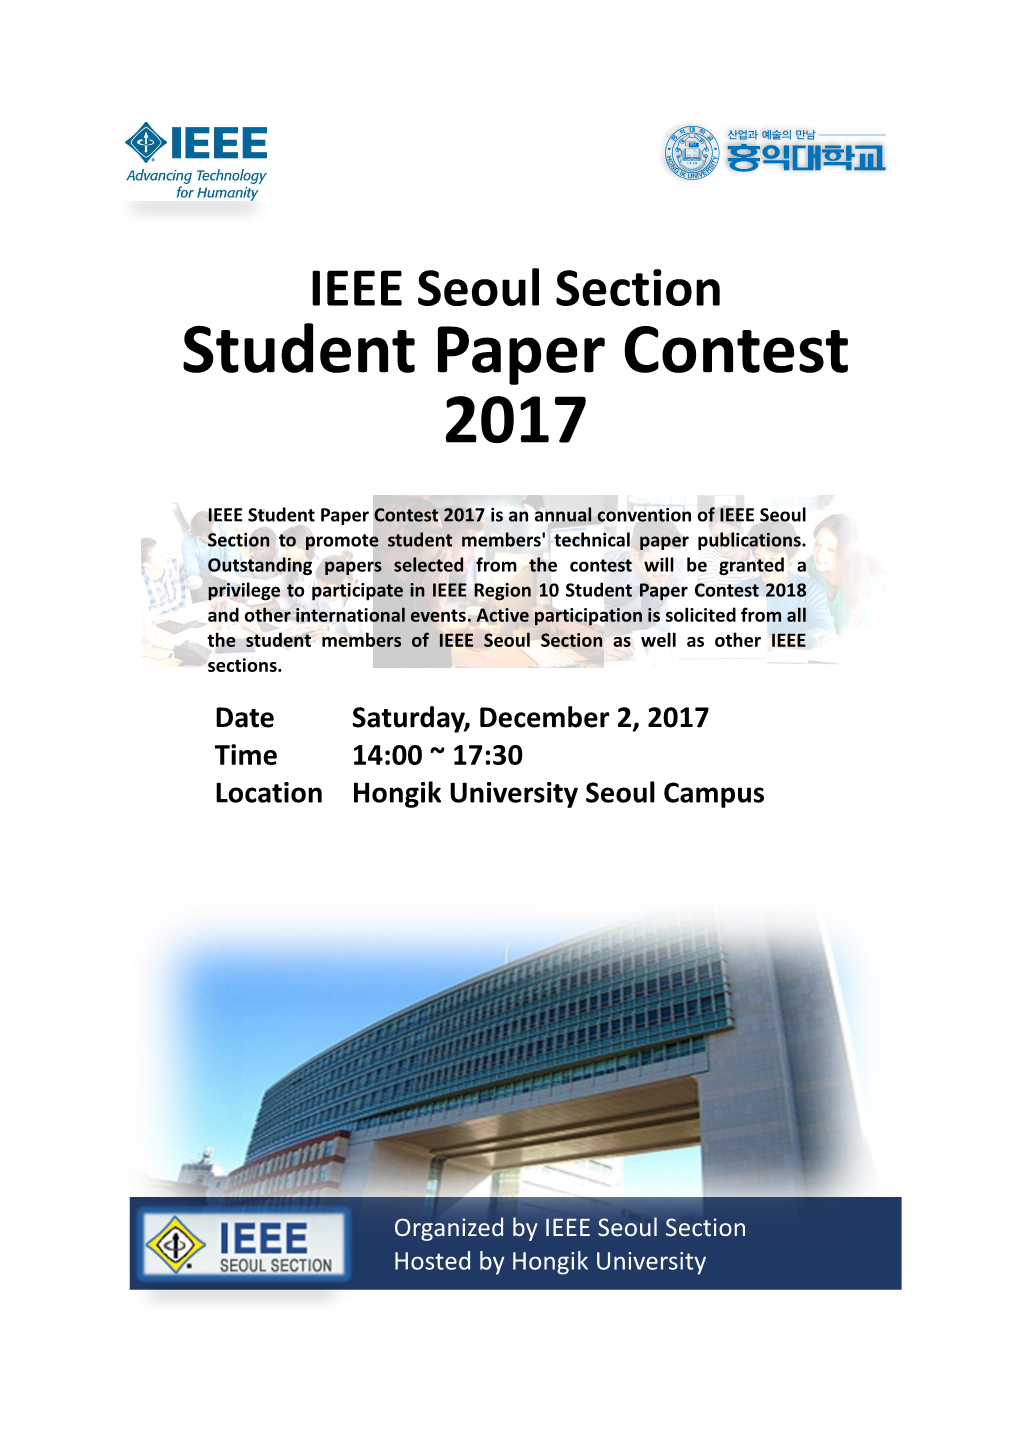 Student Paper Contest 2017